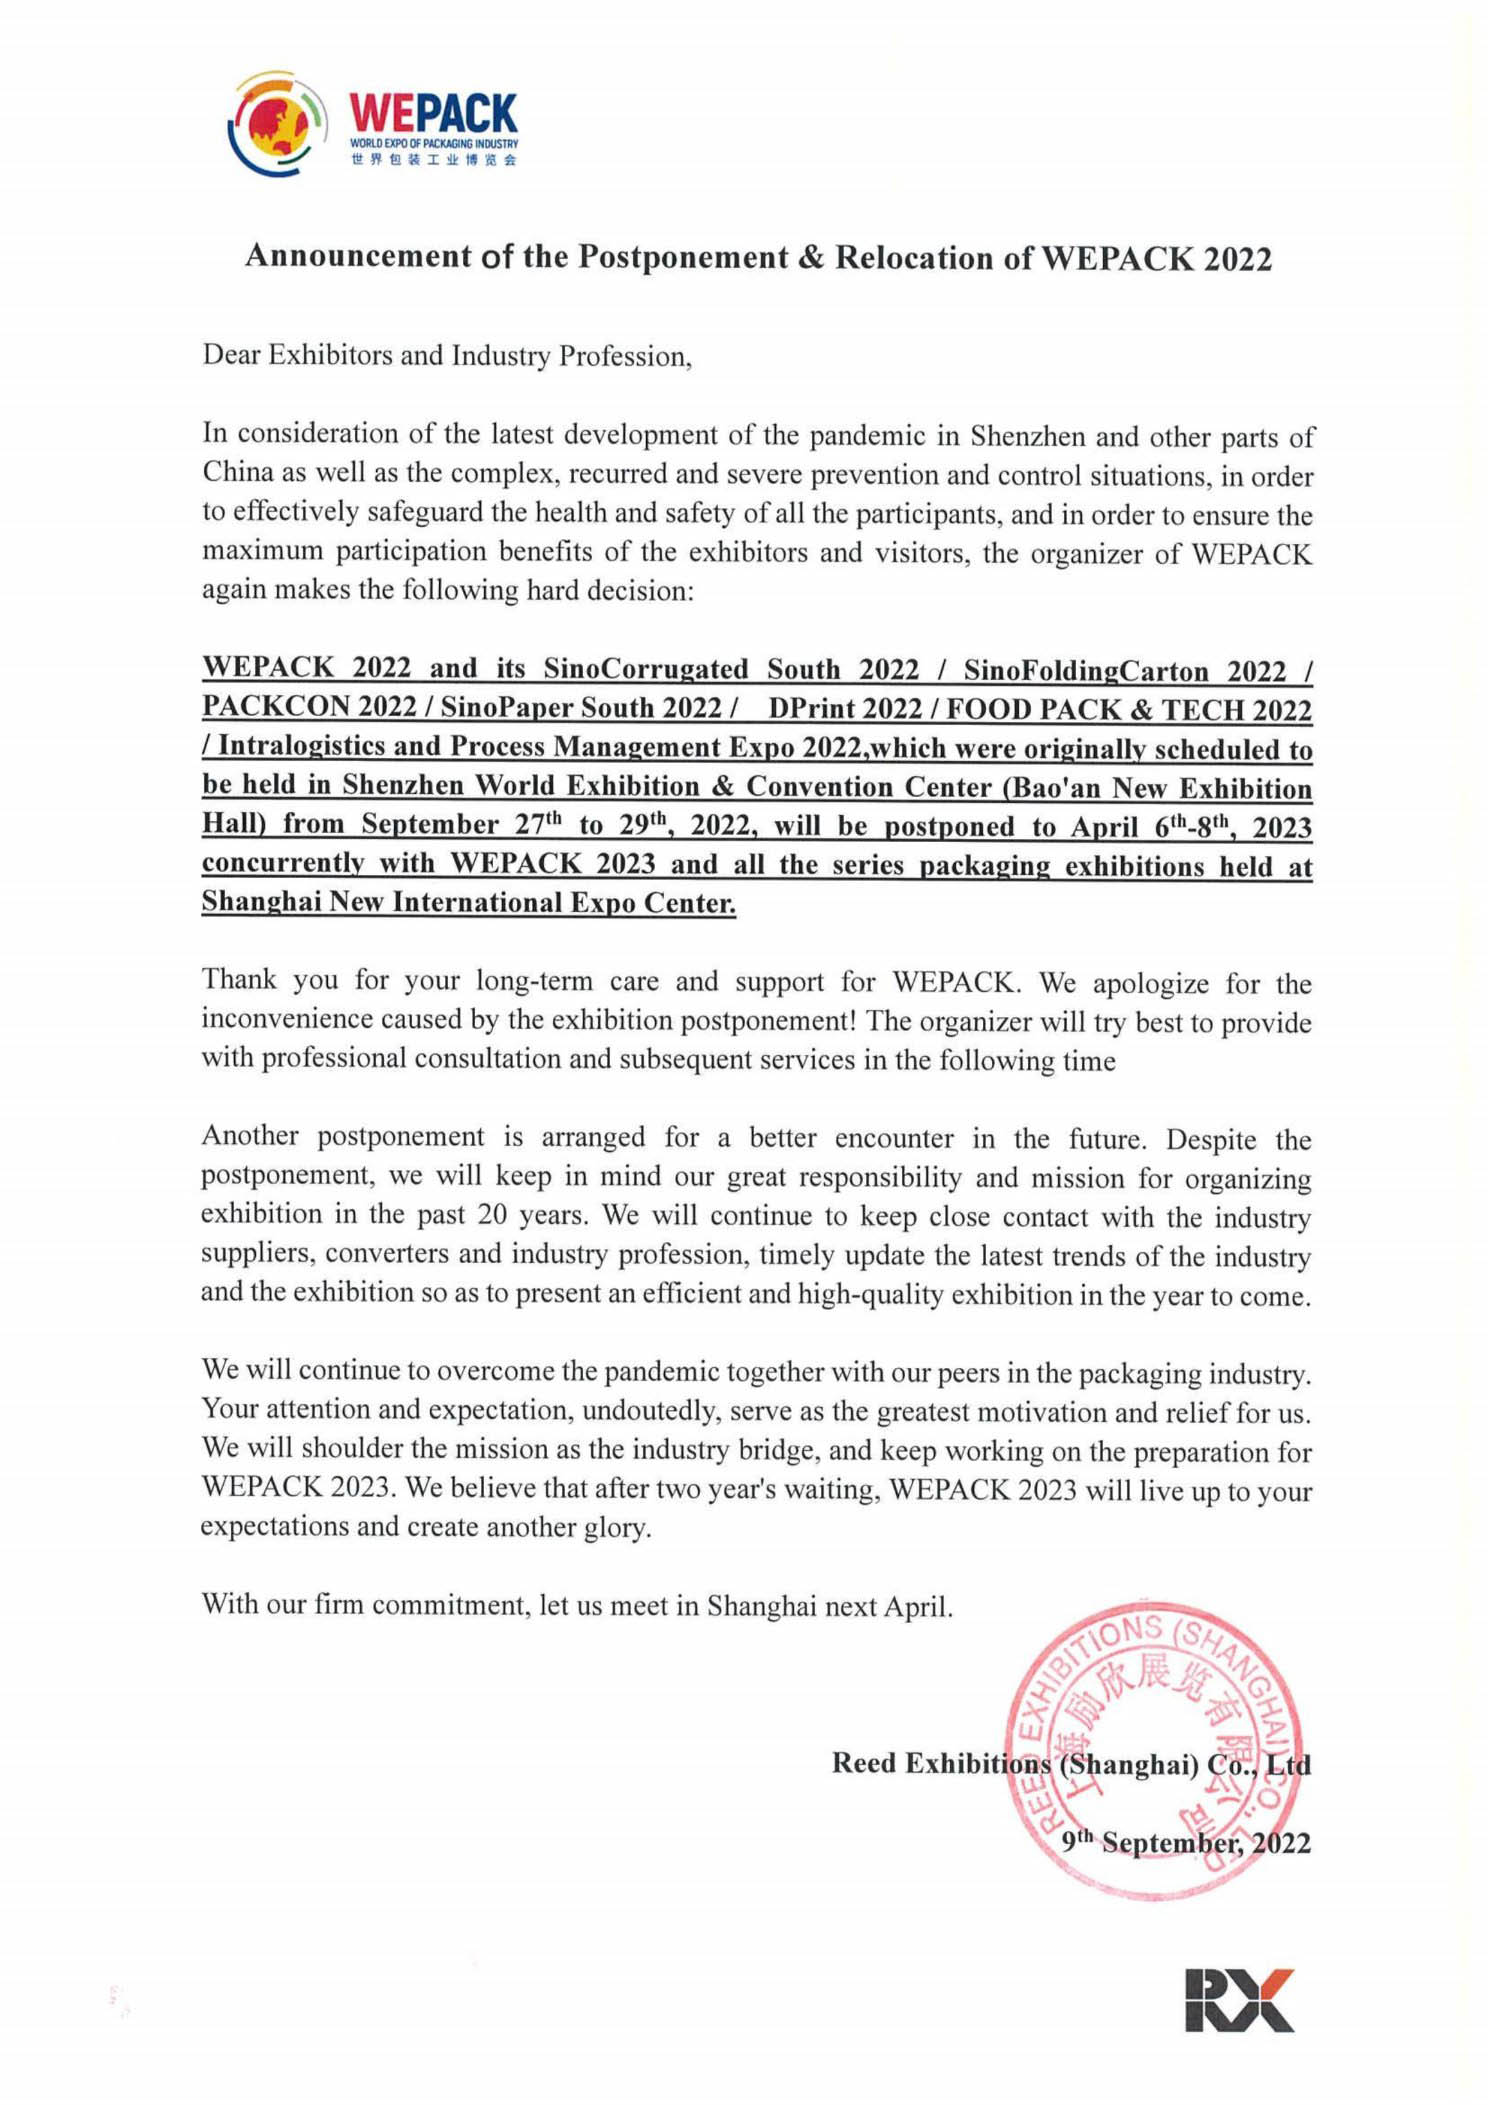 Announcement of the Postponement & Relocation of SinoFoldingCarton 2022